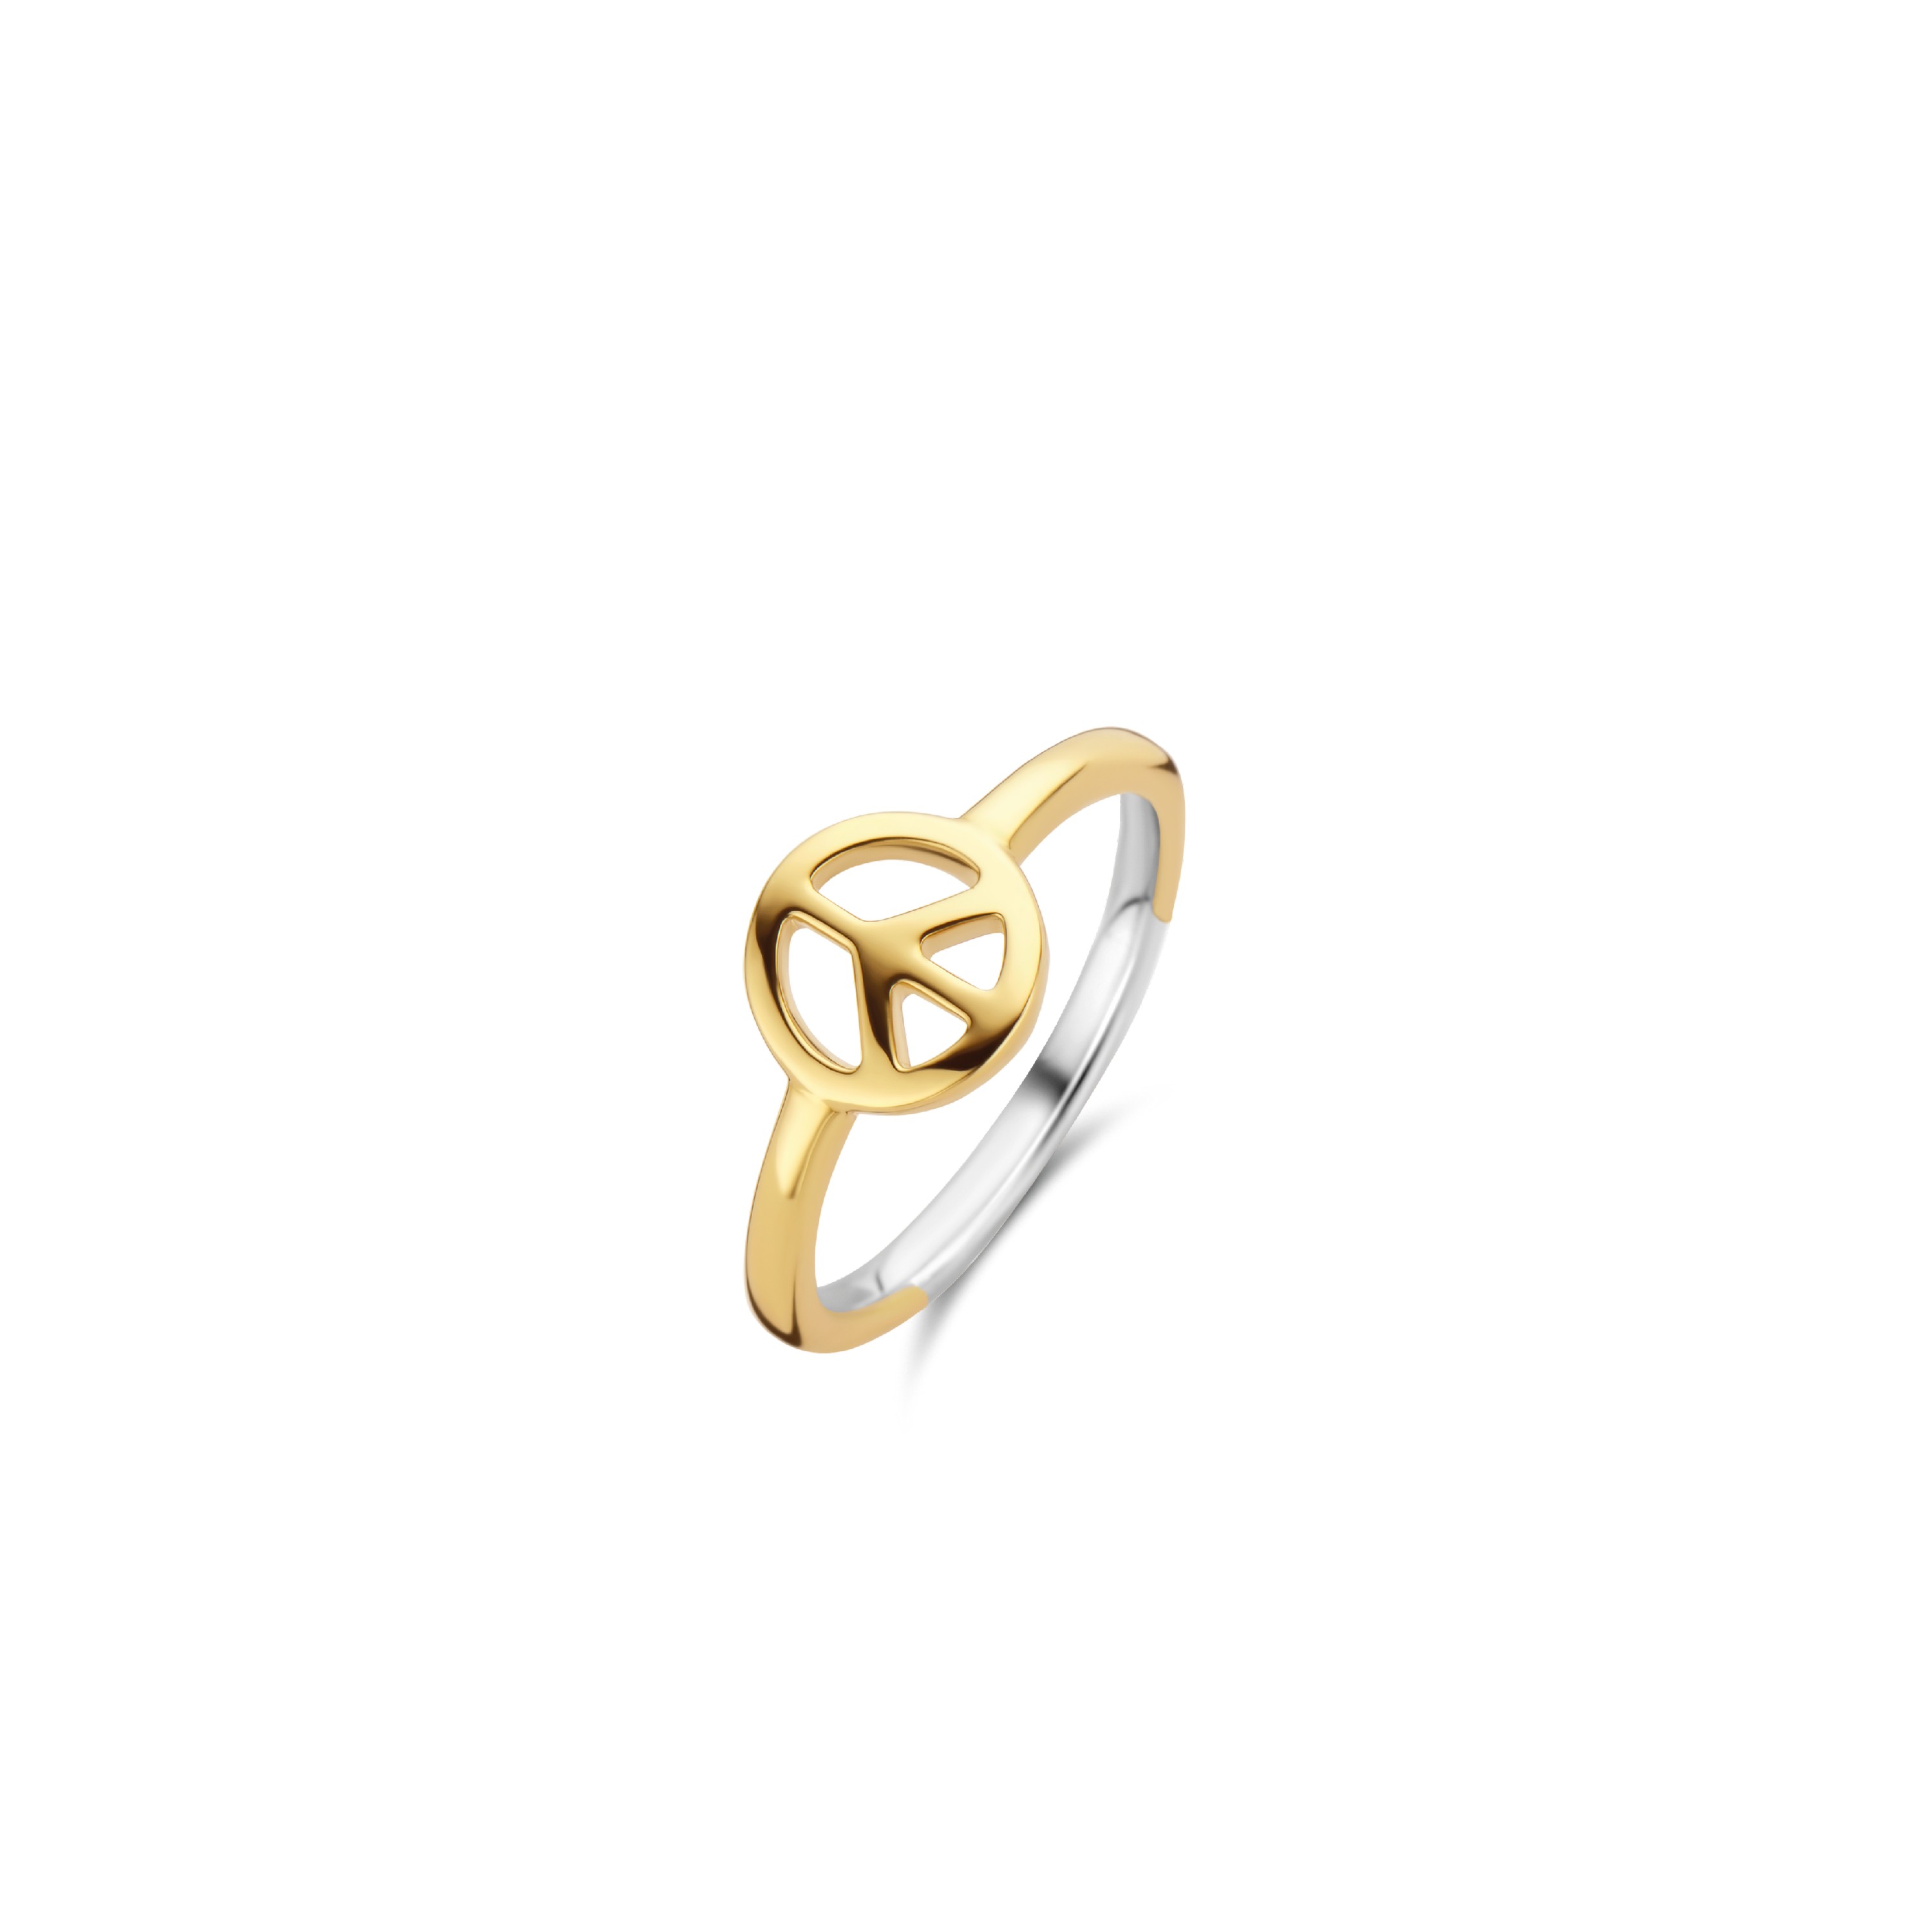 TI SENTO - Milano Ring 12222SY Gala Jewelers Inc. White Oak, PA